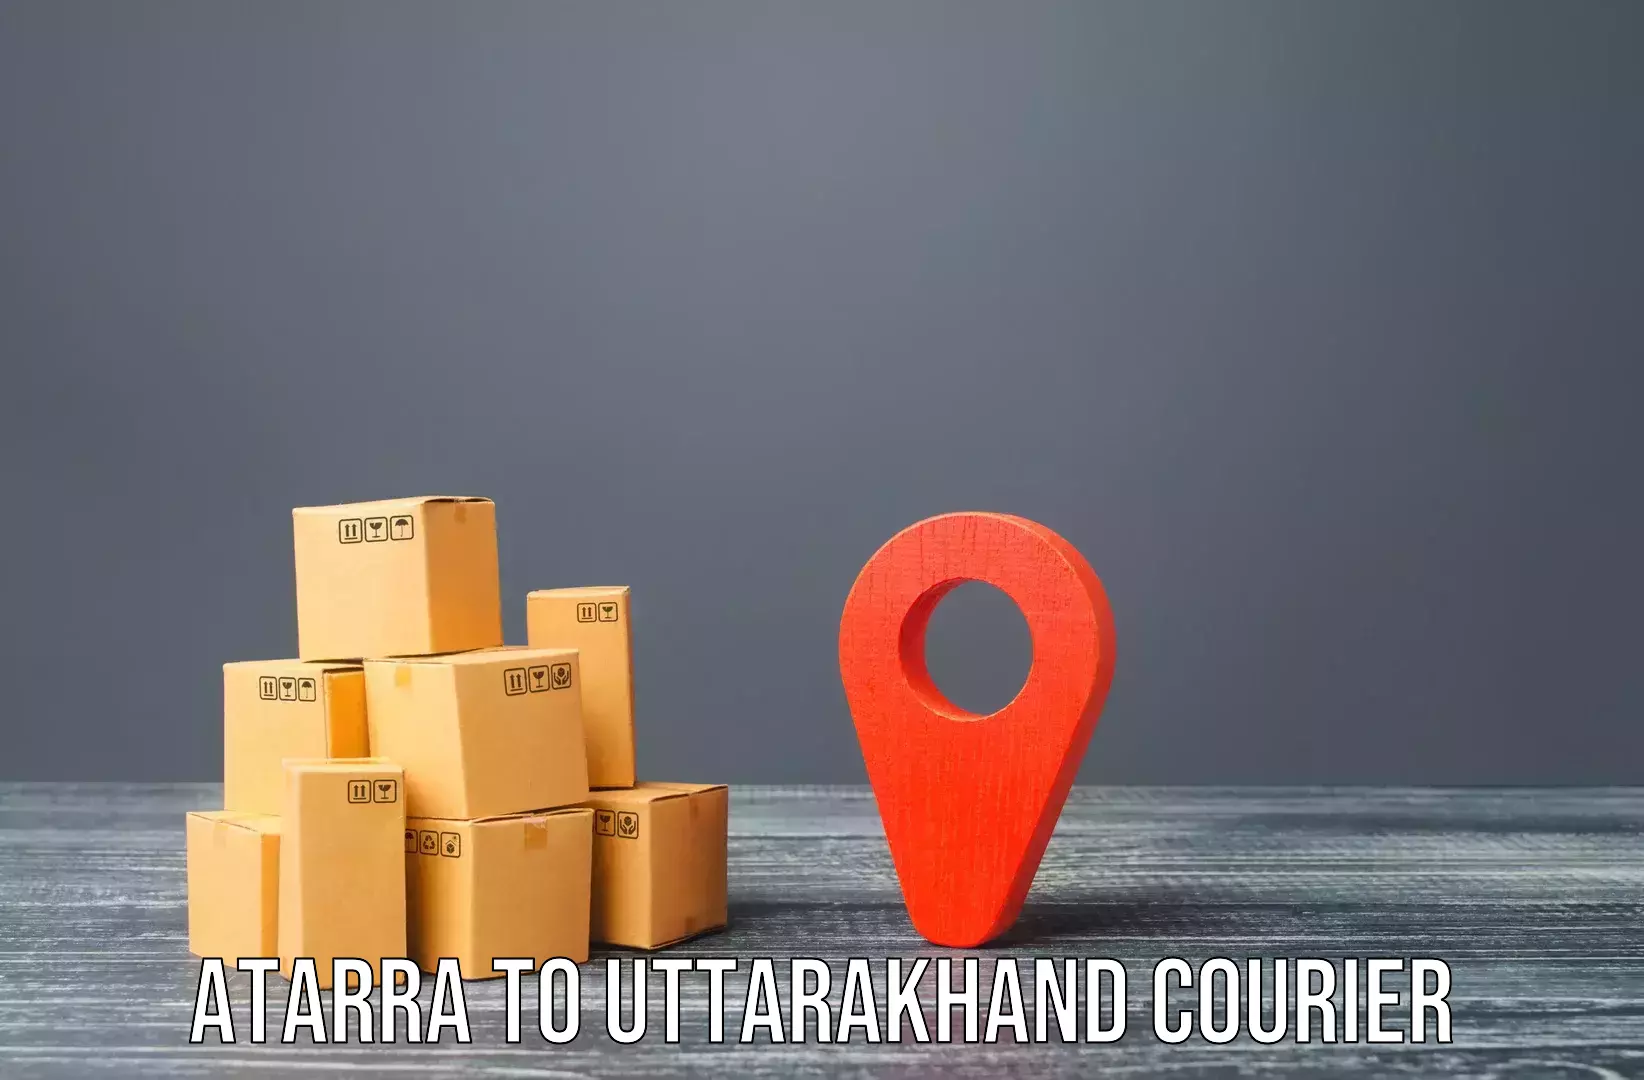 Home shifting experts Atarra to Uttarakhand